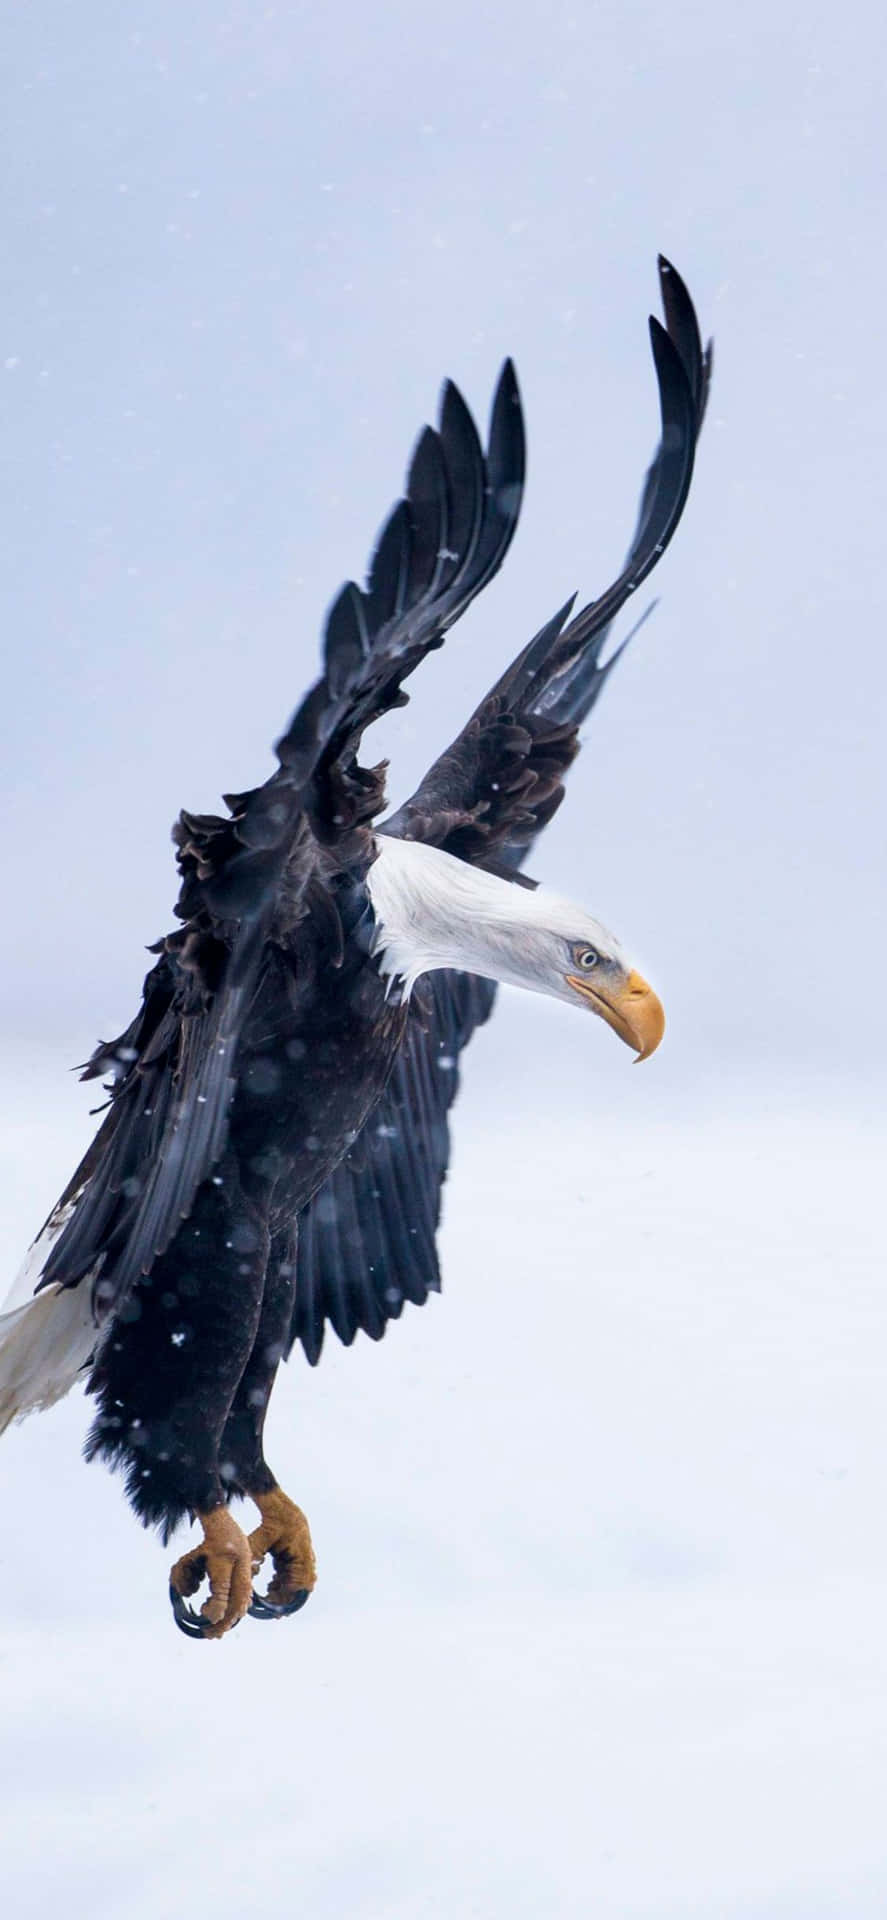 Download wallpaper 840x1160 flight predator bird bald eagle iphone 4  iphone 4s ipod touch 840x1160 hd background 7182